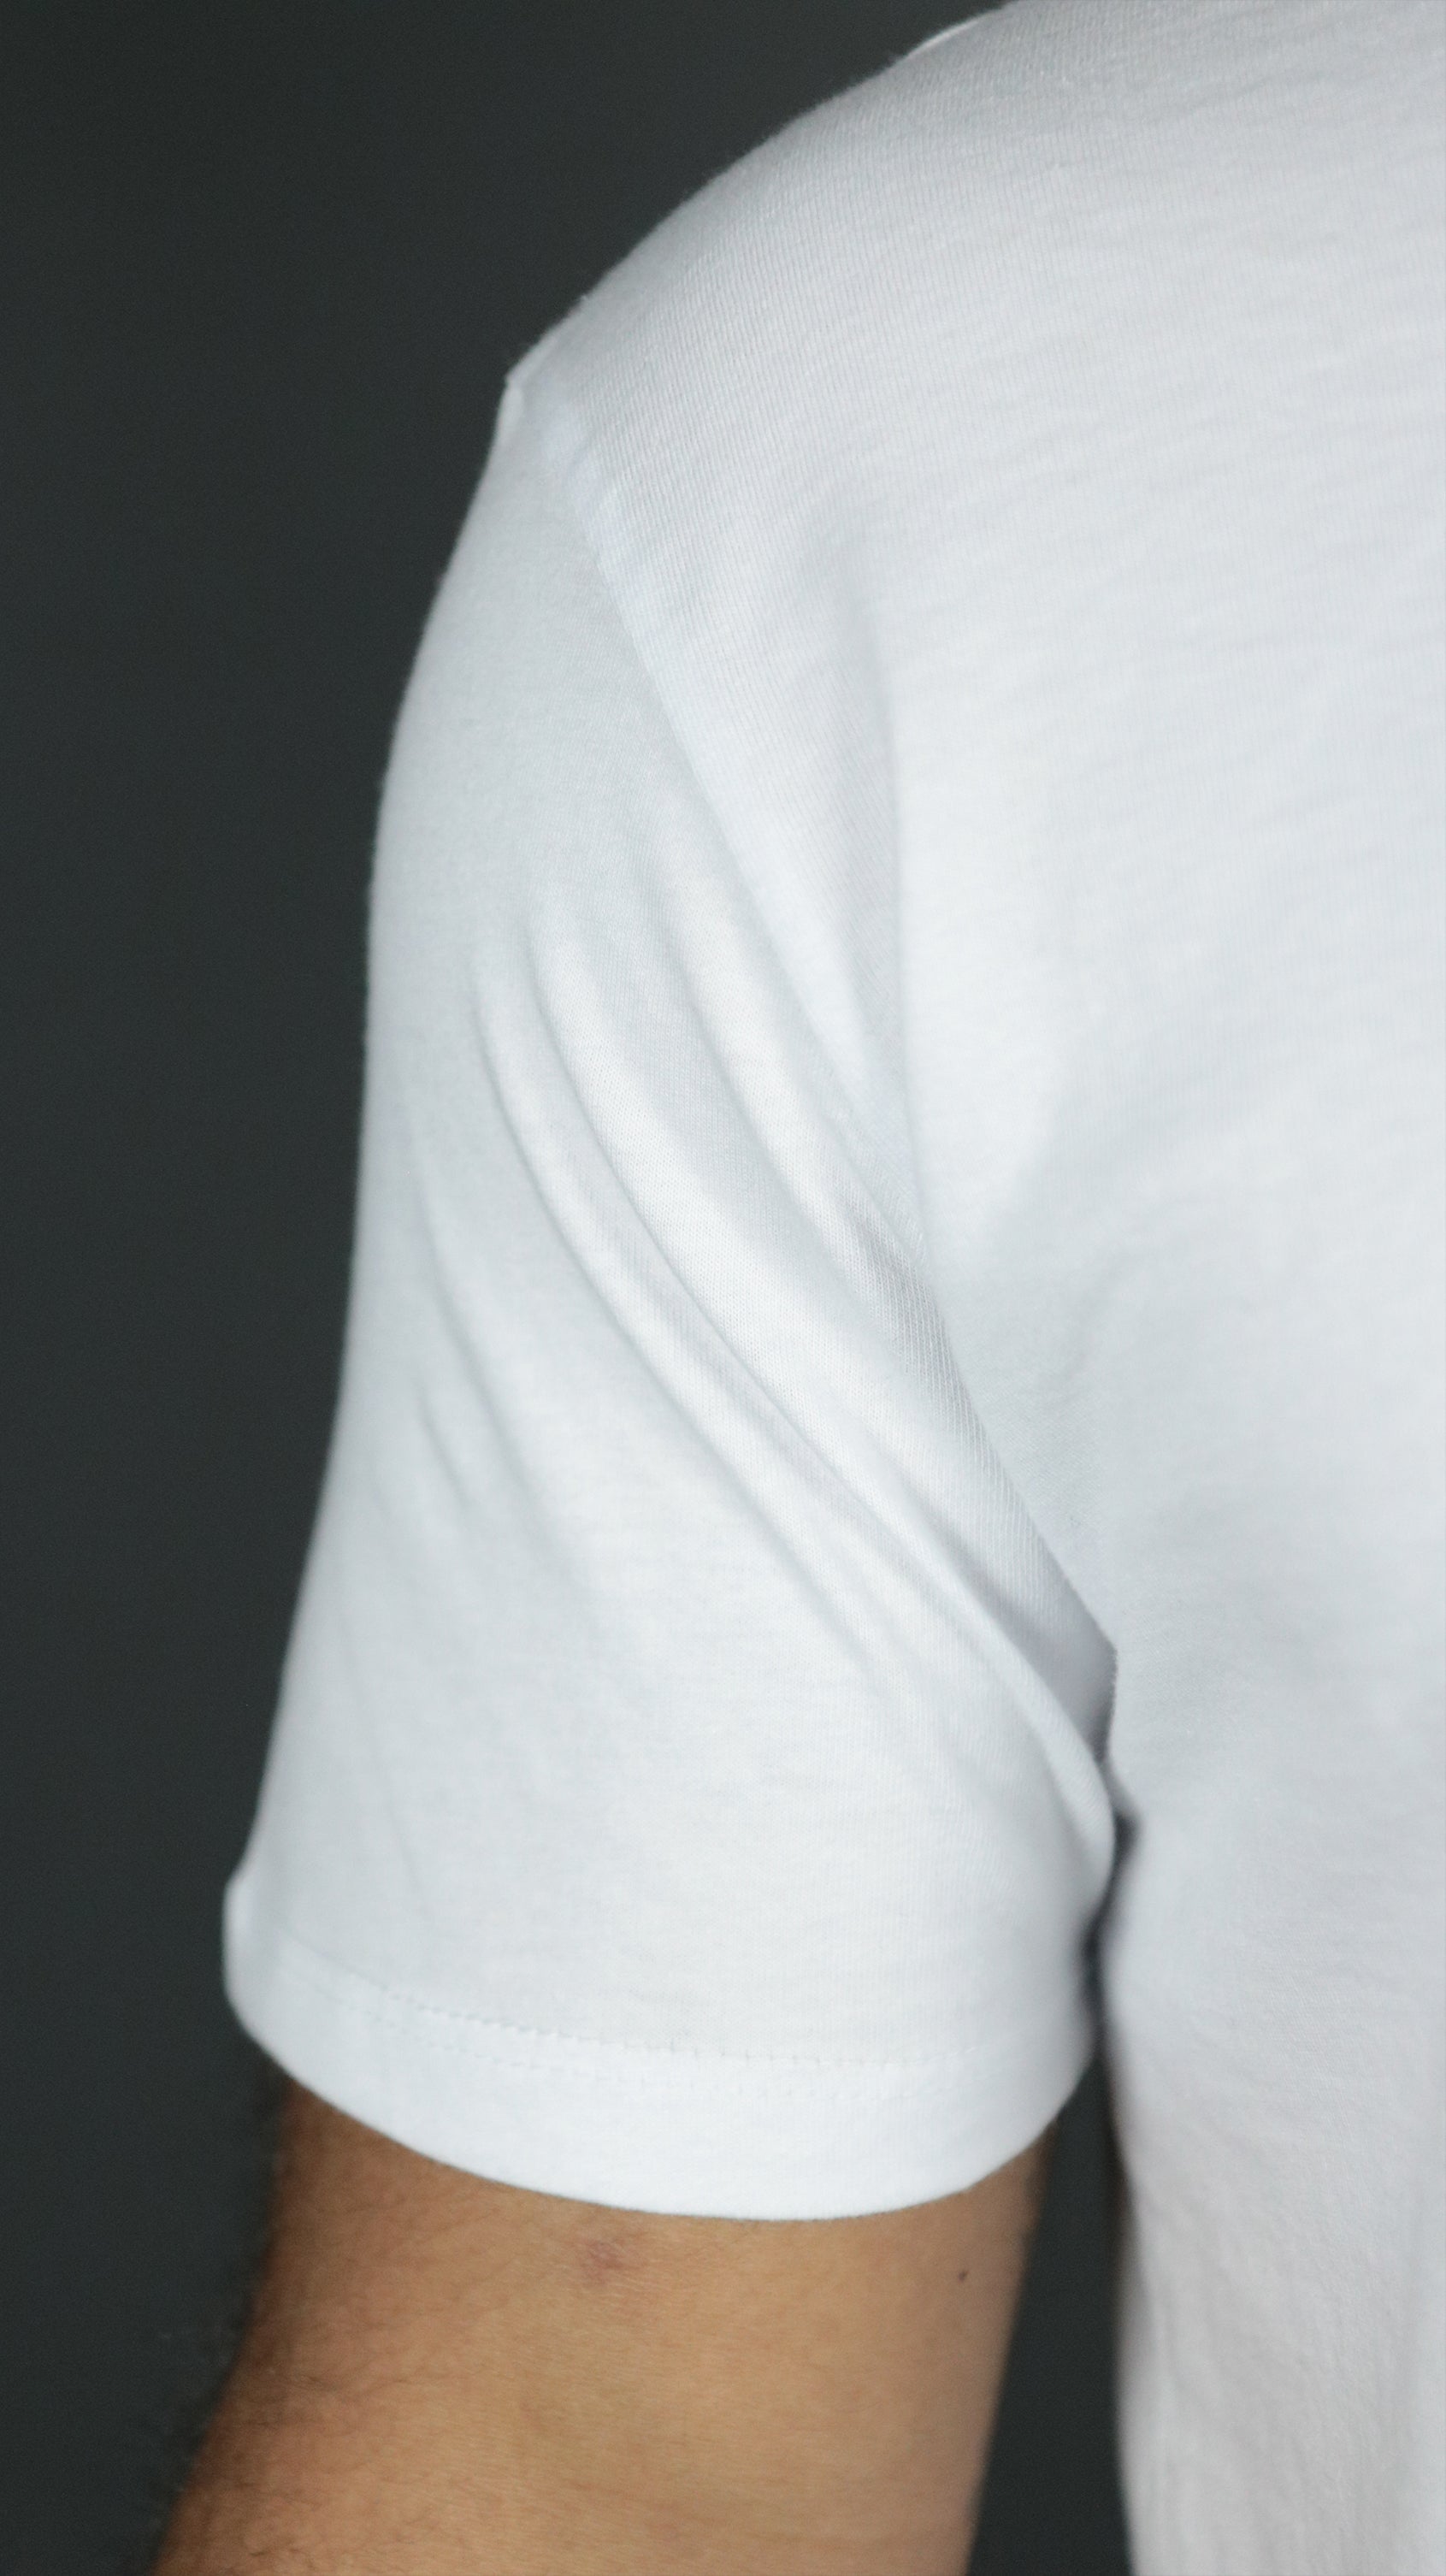 The right shoulder fitting of the white Jordan Craig elongated t shirt for men.